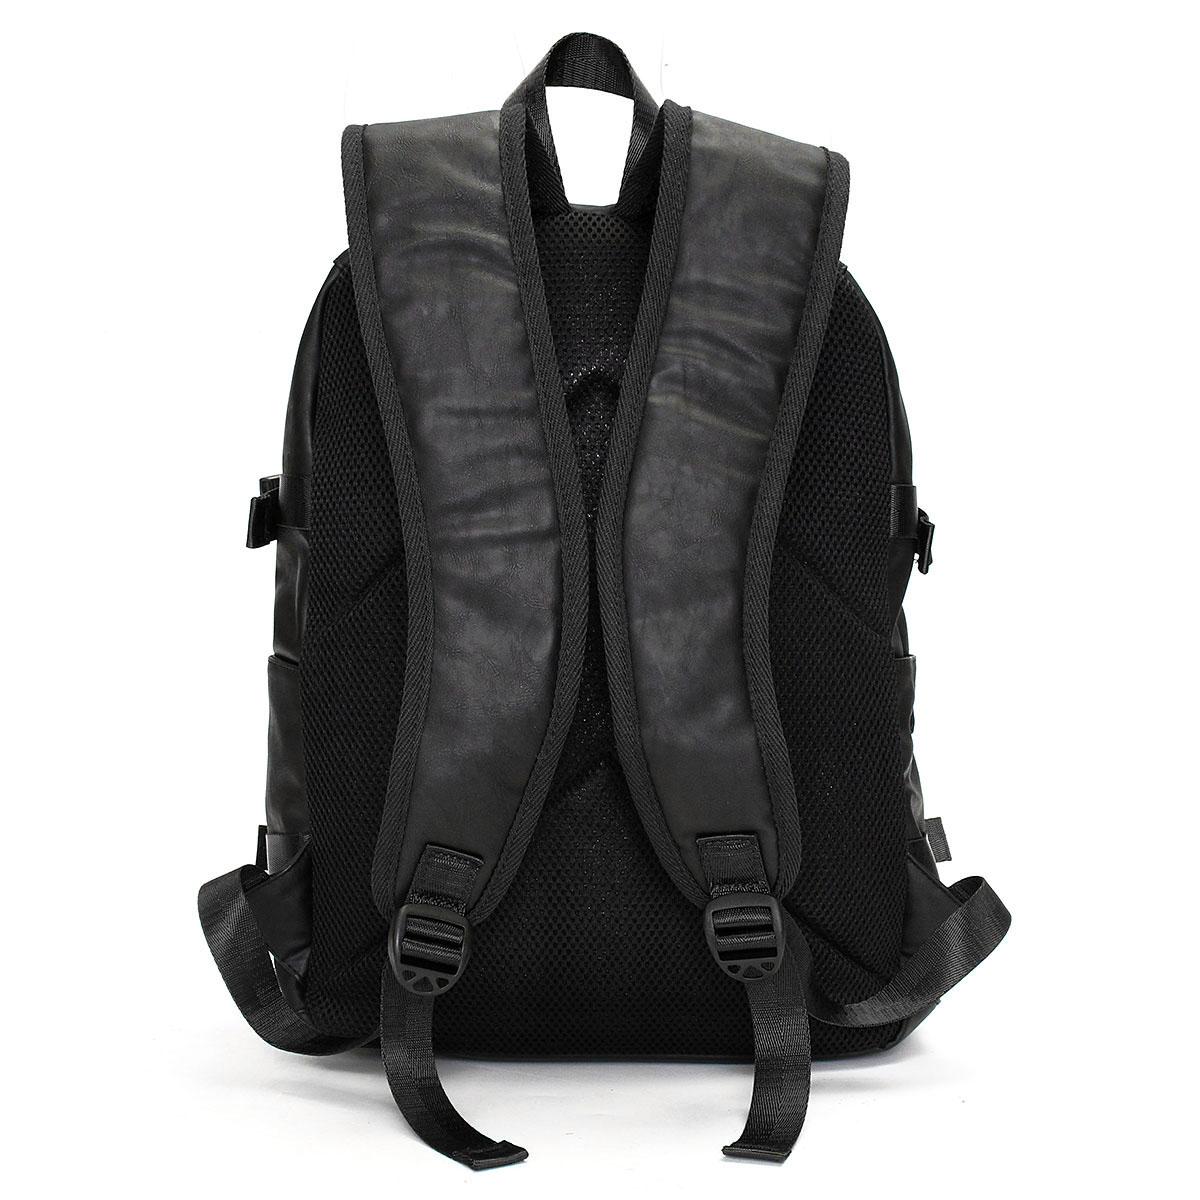 Men Vintage PU Leather Zipper Laptop Travel School Outdoor Backpack Bag Rucksack 14